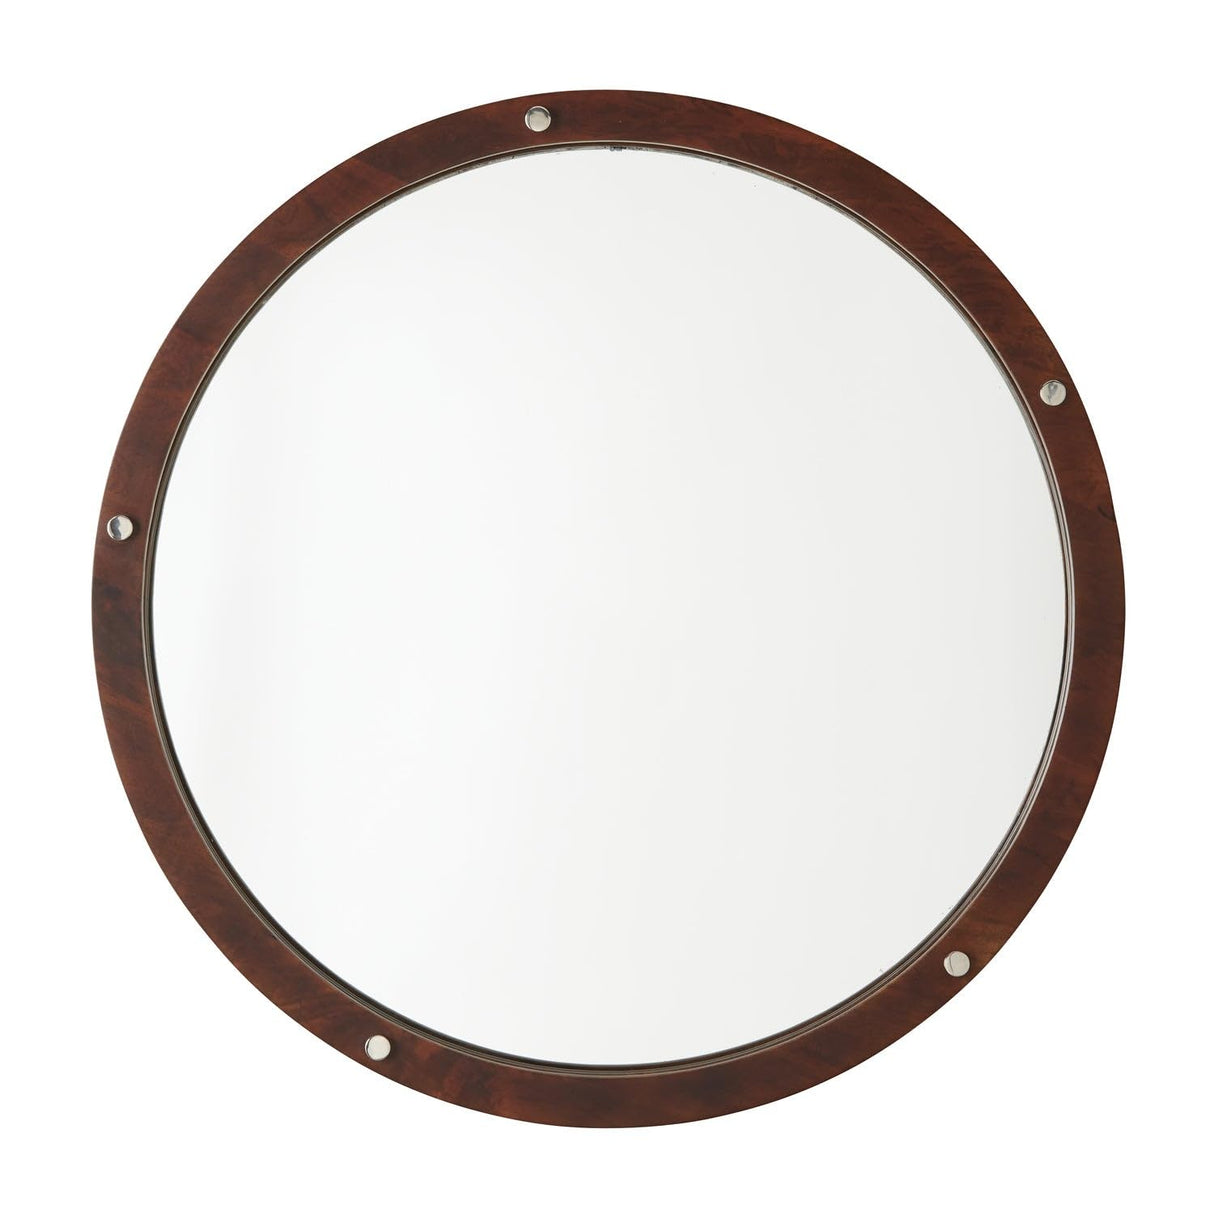 Capital Lighting 739901MM Mirror Decorative Wooden Frame Mirror Dark Wood and Polished Nickel